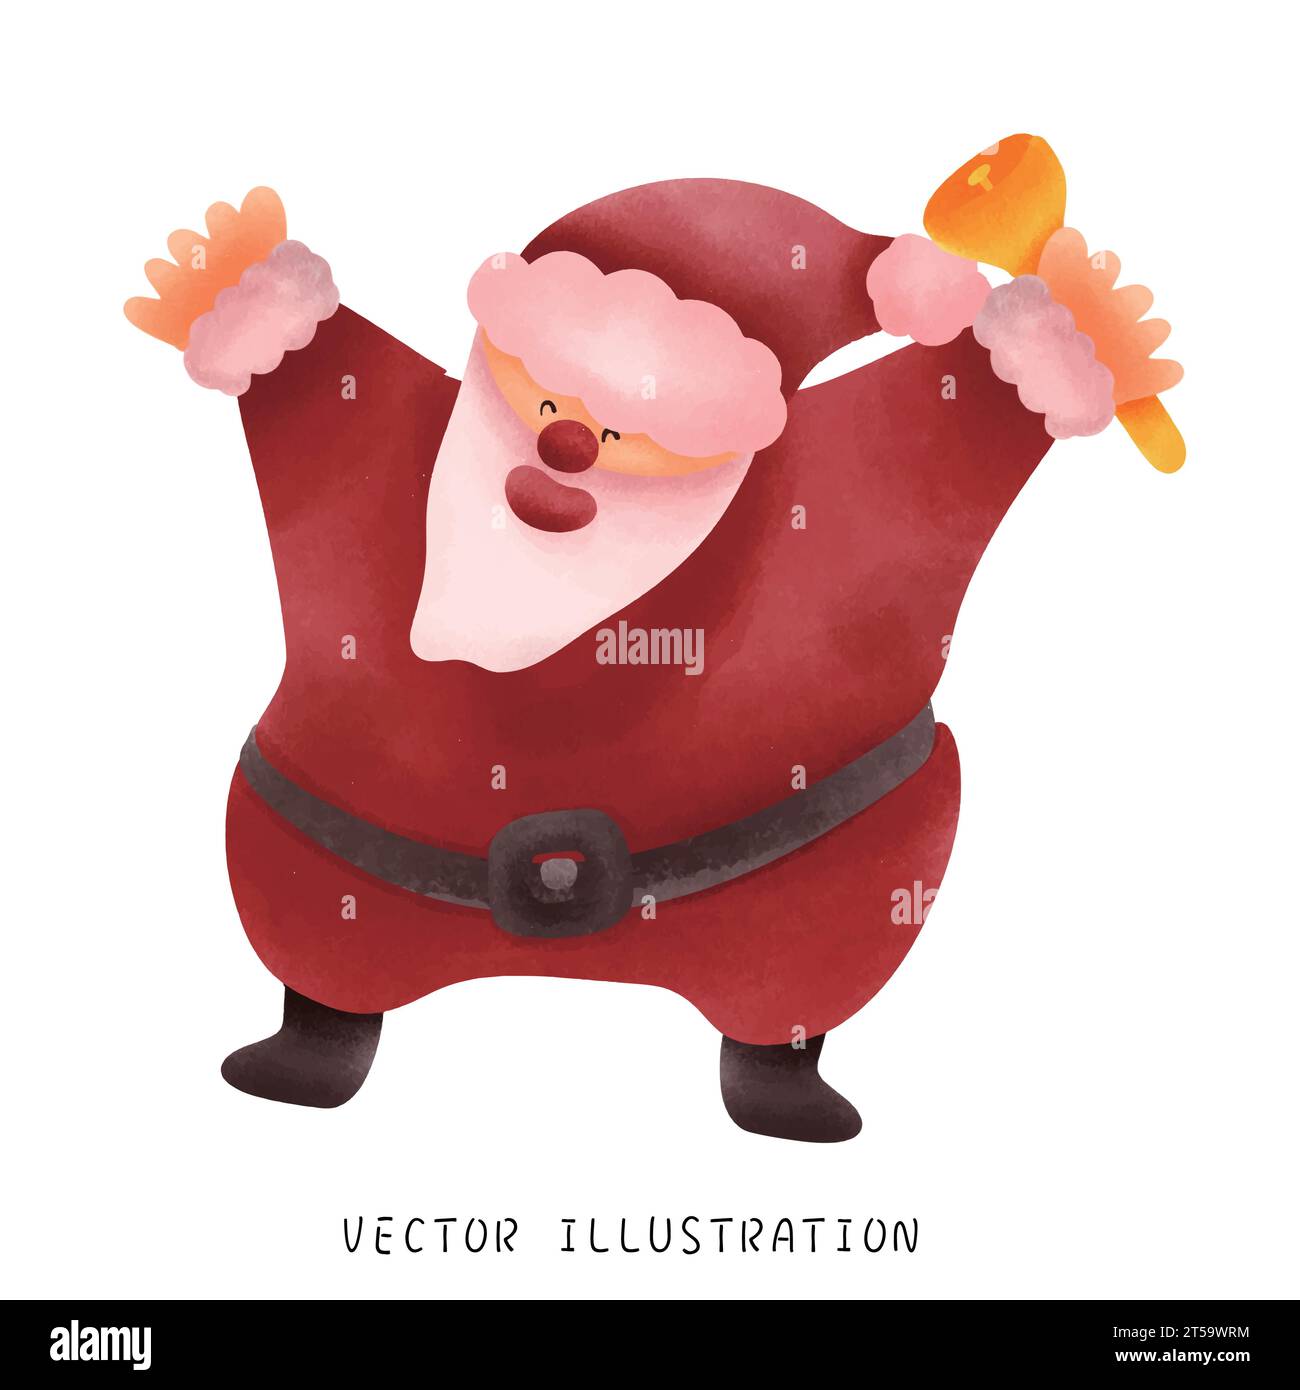 Hand Drawn Santa Claus and Festive Christmas Illustration Stock Vector